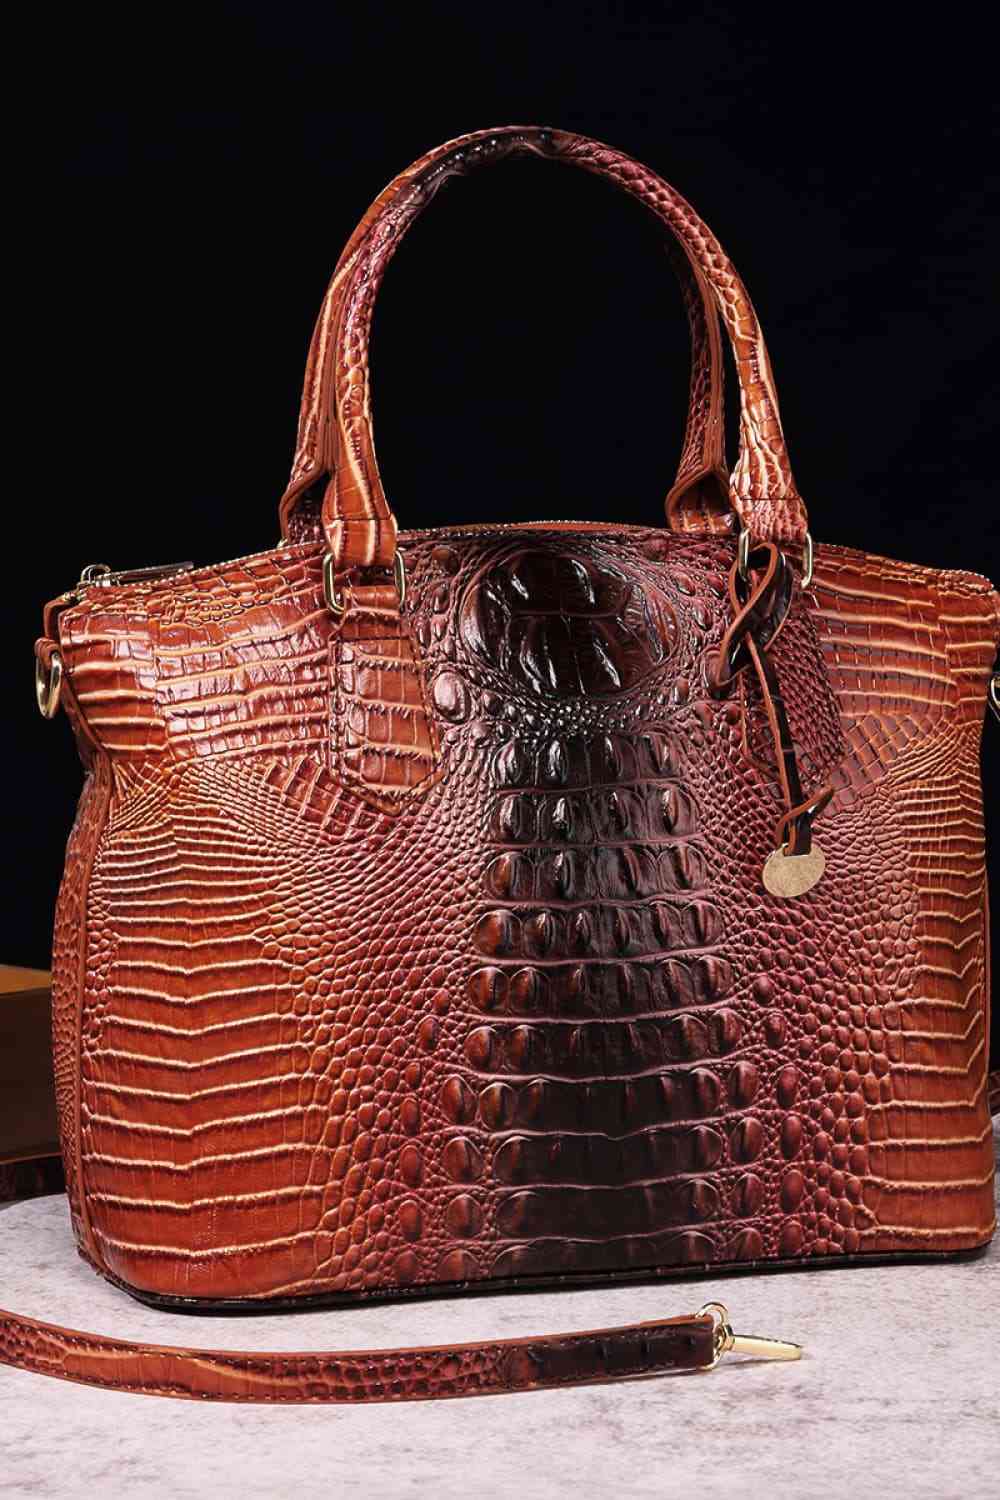 Gradient PU Leather Handbag - BloomBliss.com